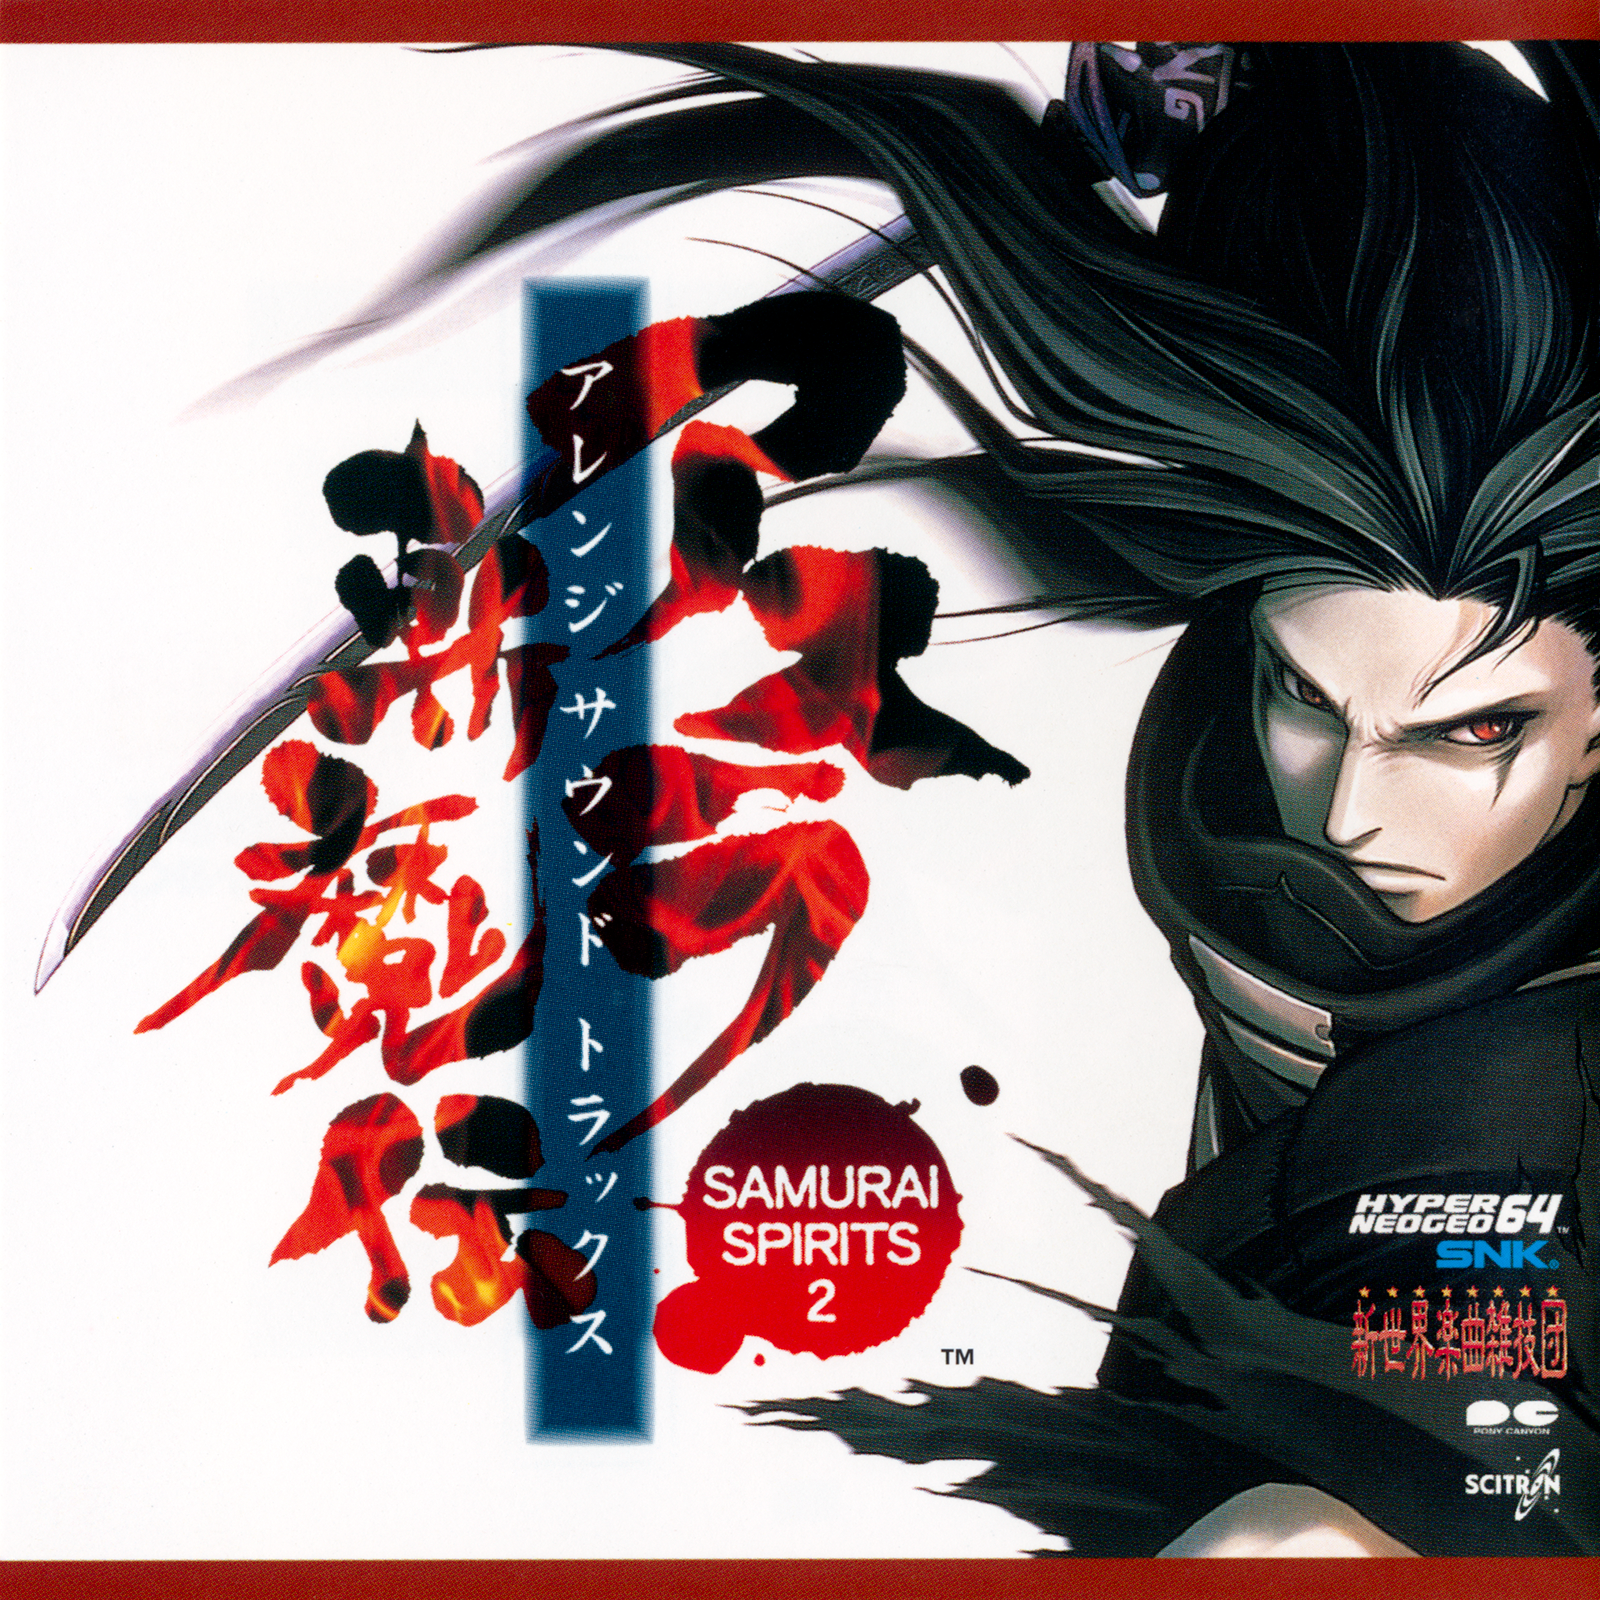 Samurai Shodown Showdown Motion Picture DVD Anime Manga Rare 702727055928 |  eBay